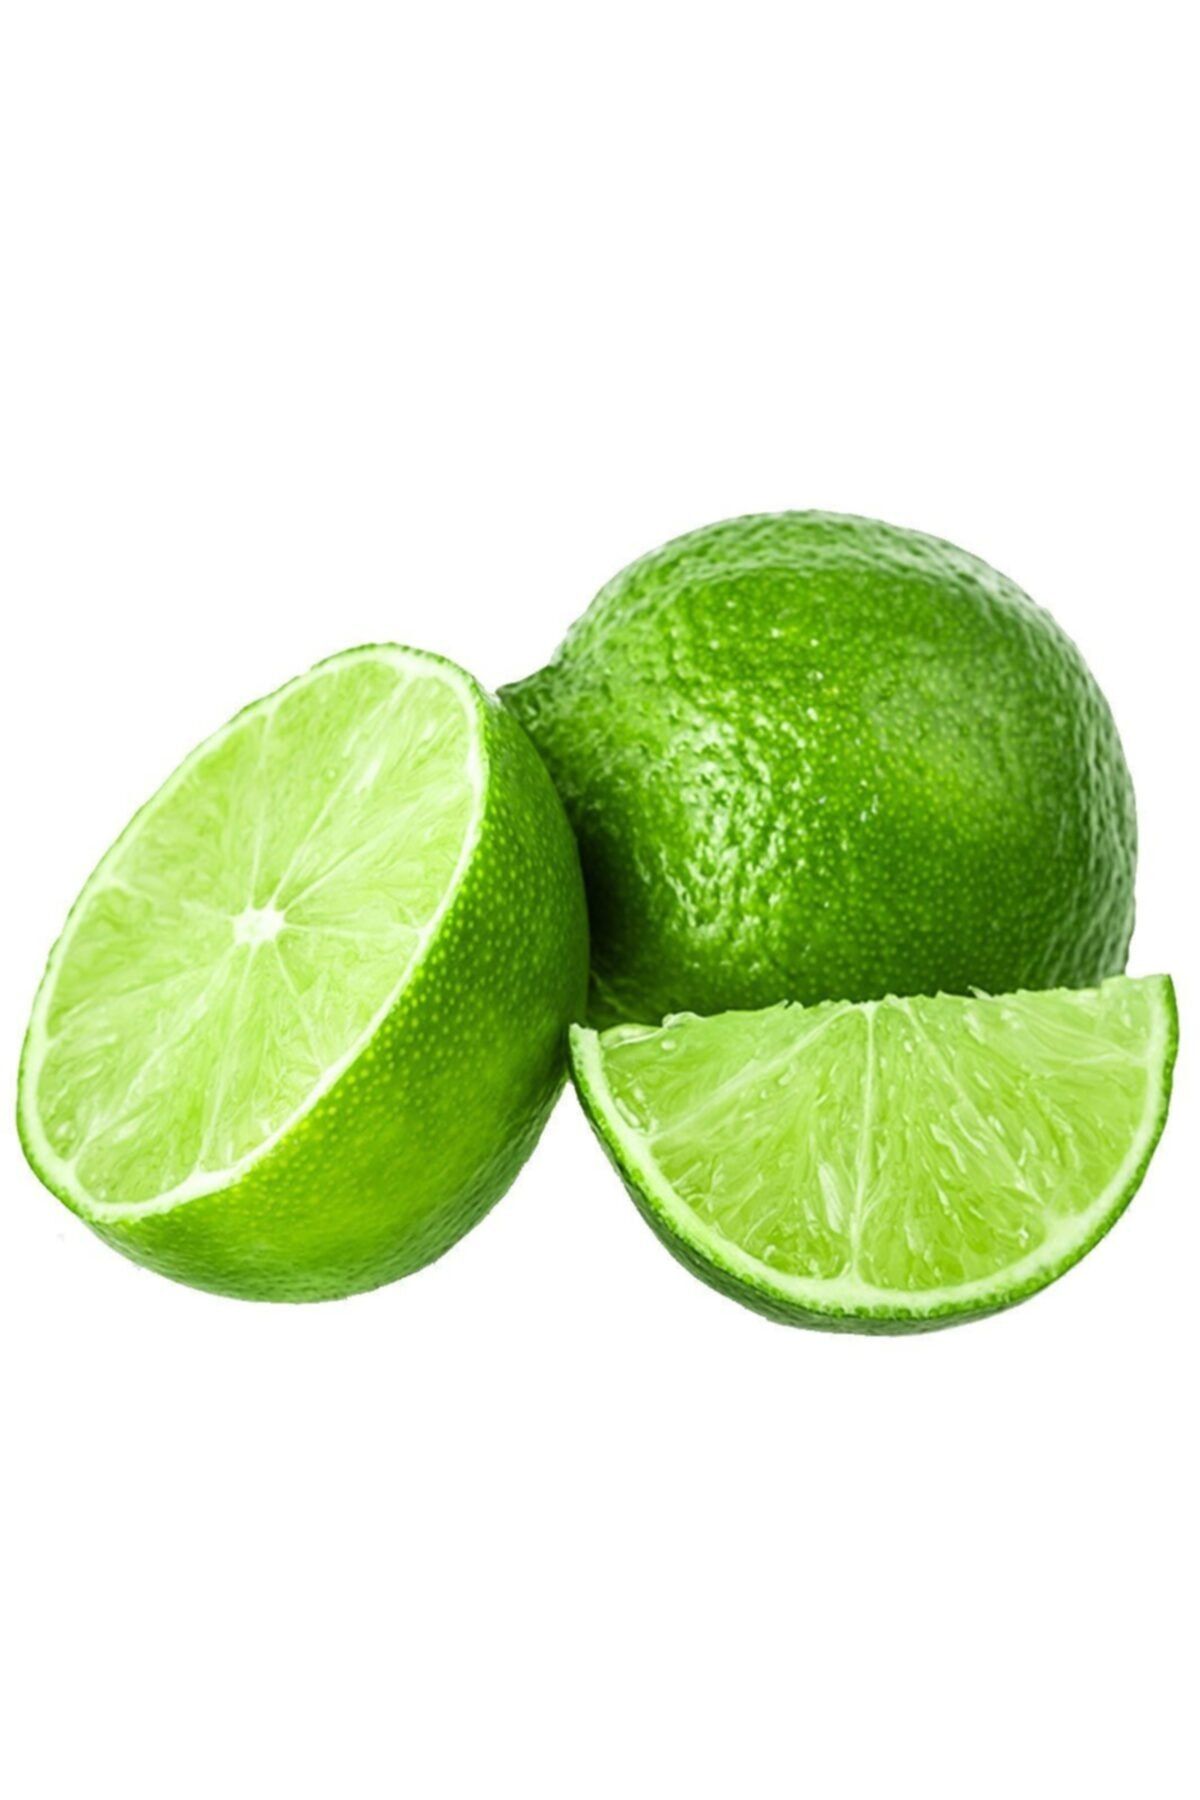 tazece Lime (Misket) Limon 1 Kg